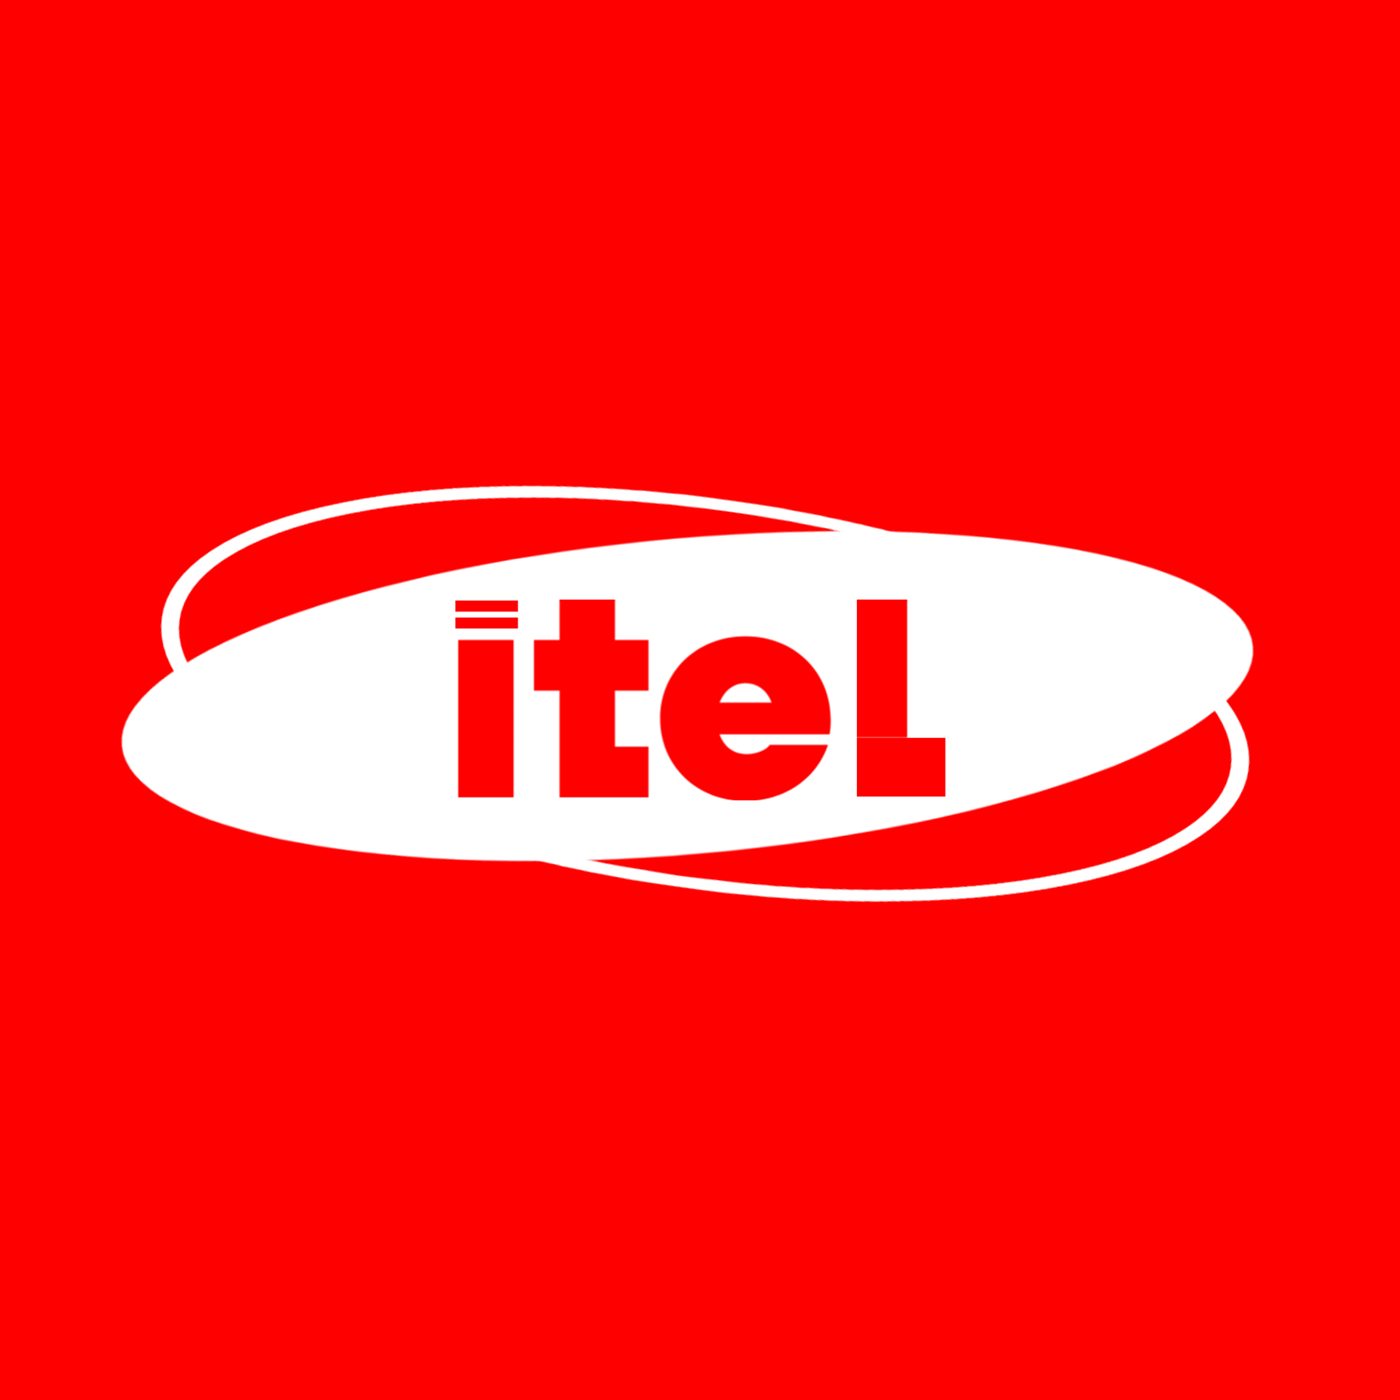 ITEL phone android logo revamp